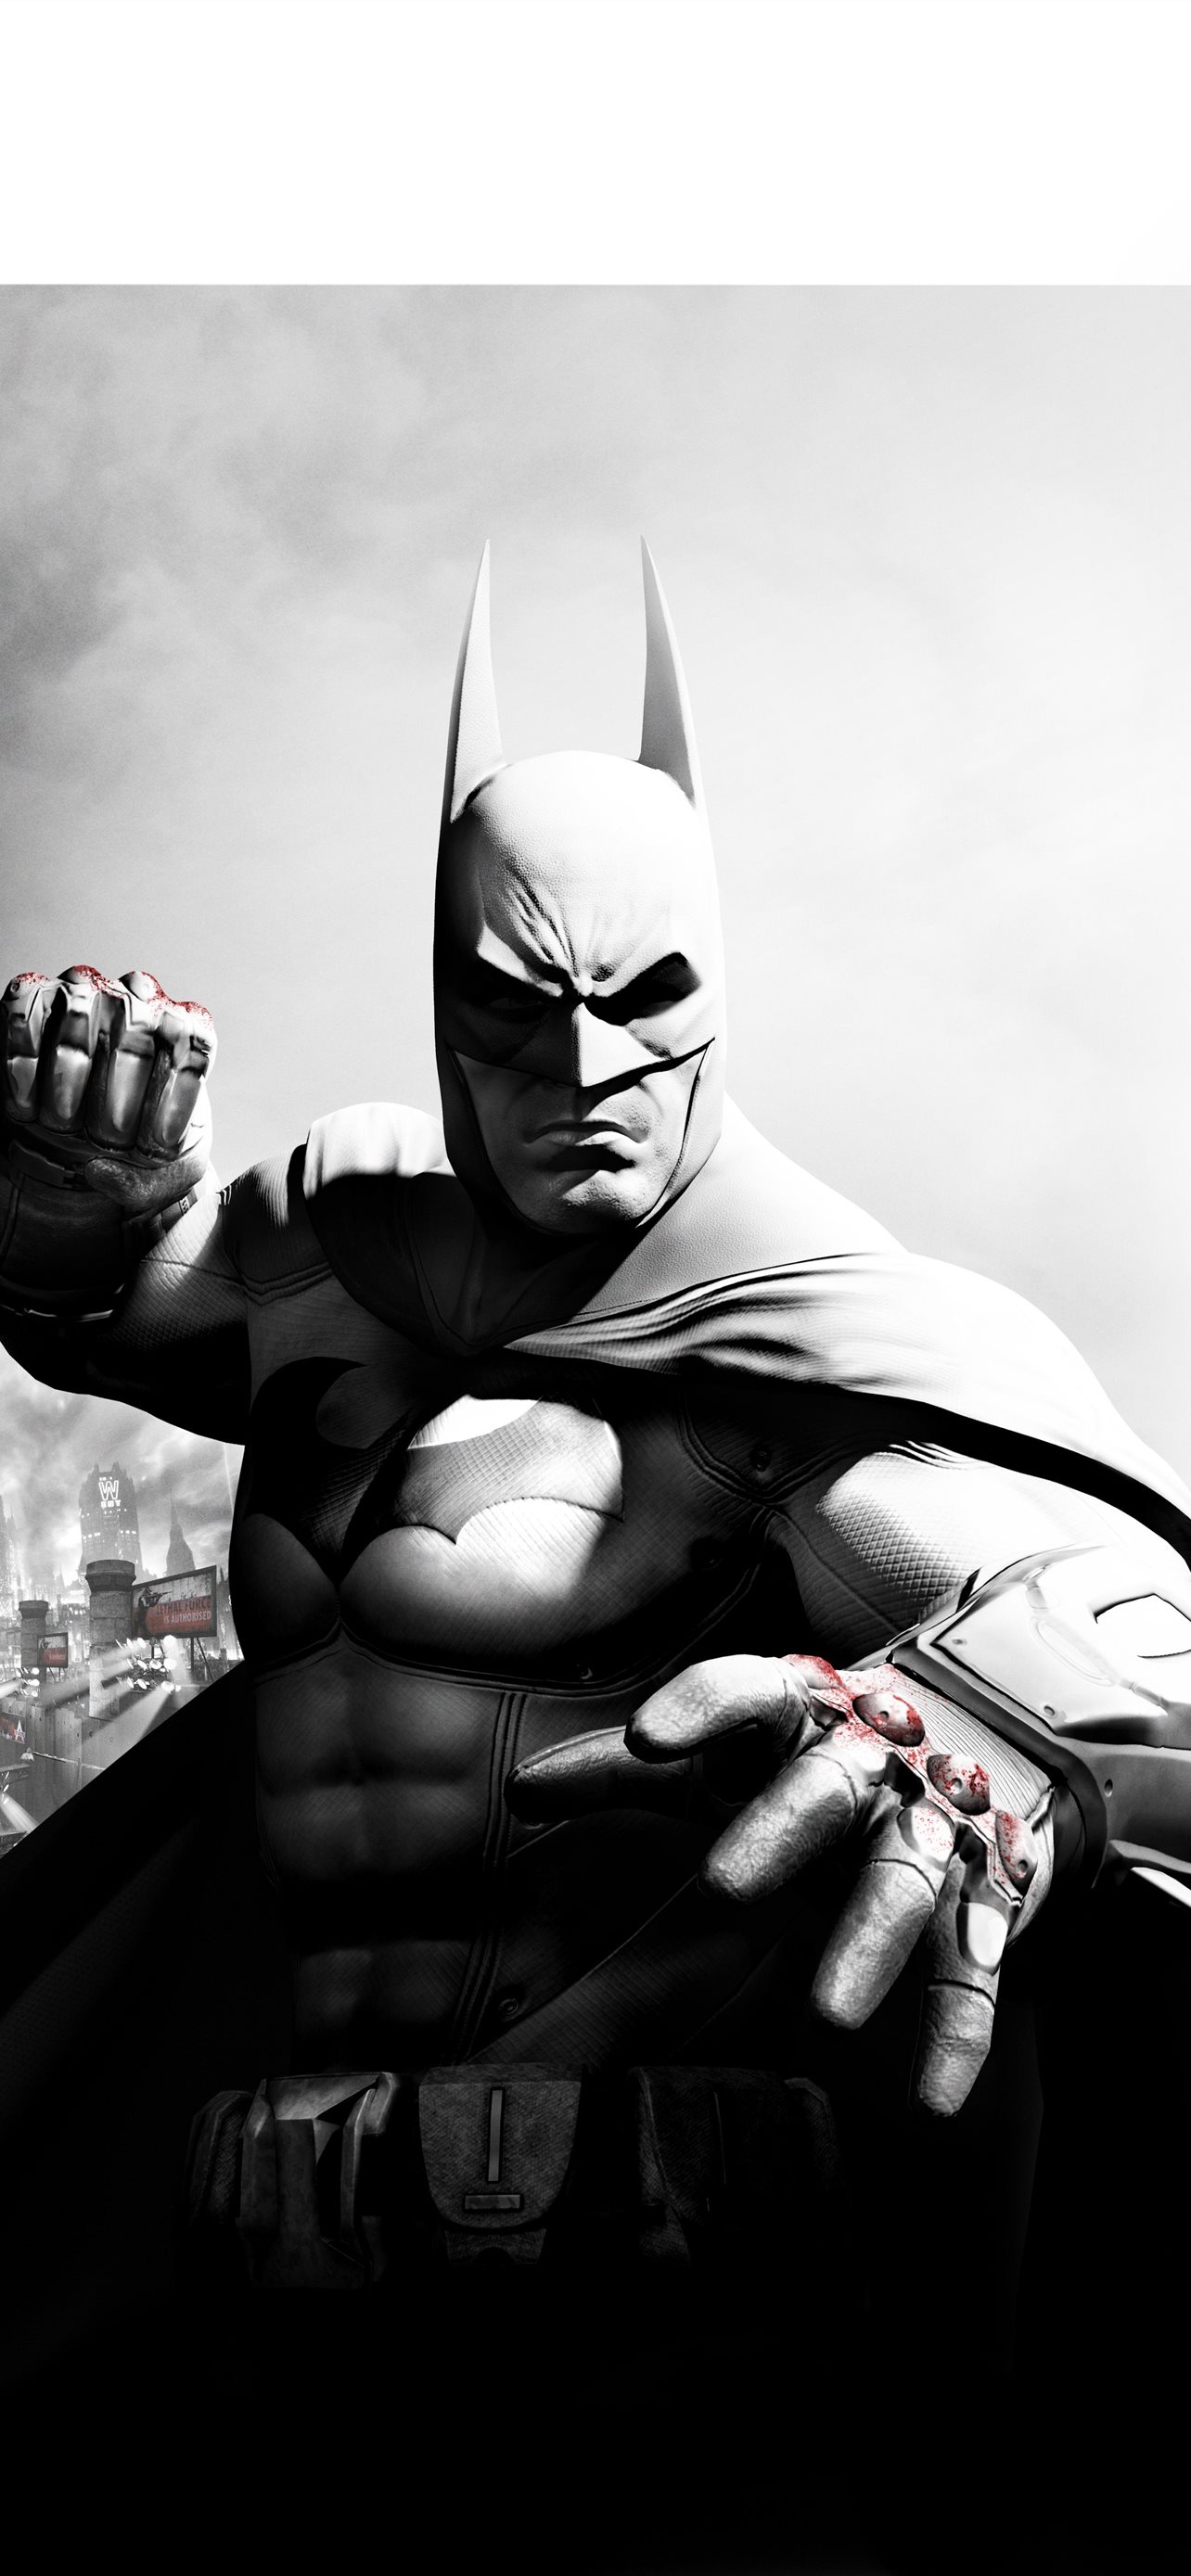 Arkham city batman iphone wallpapers free download